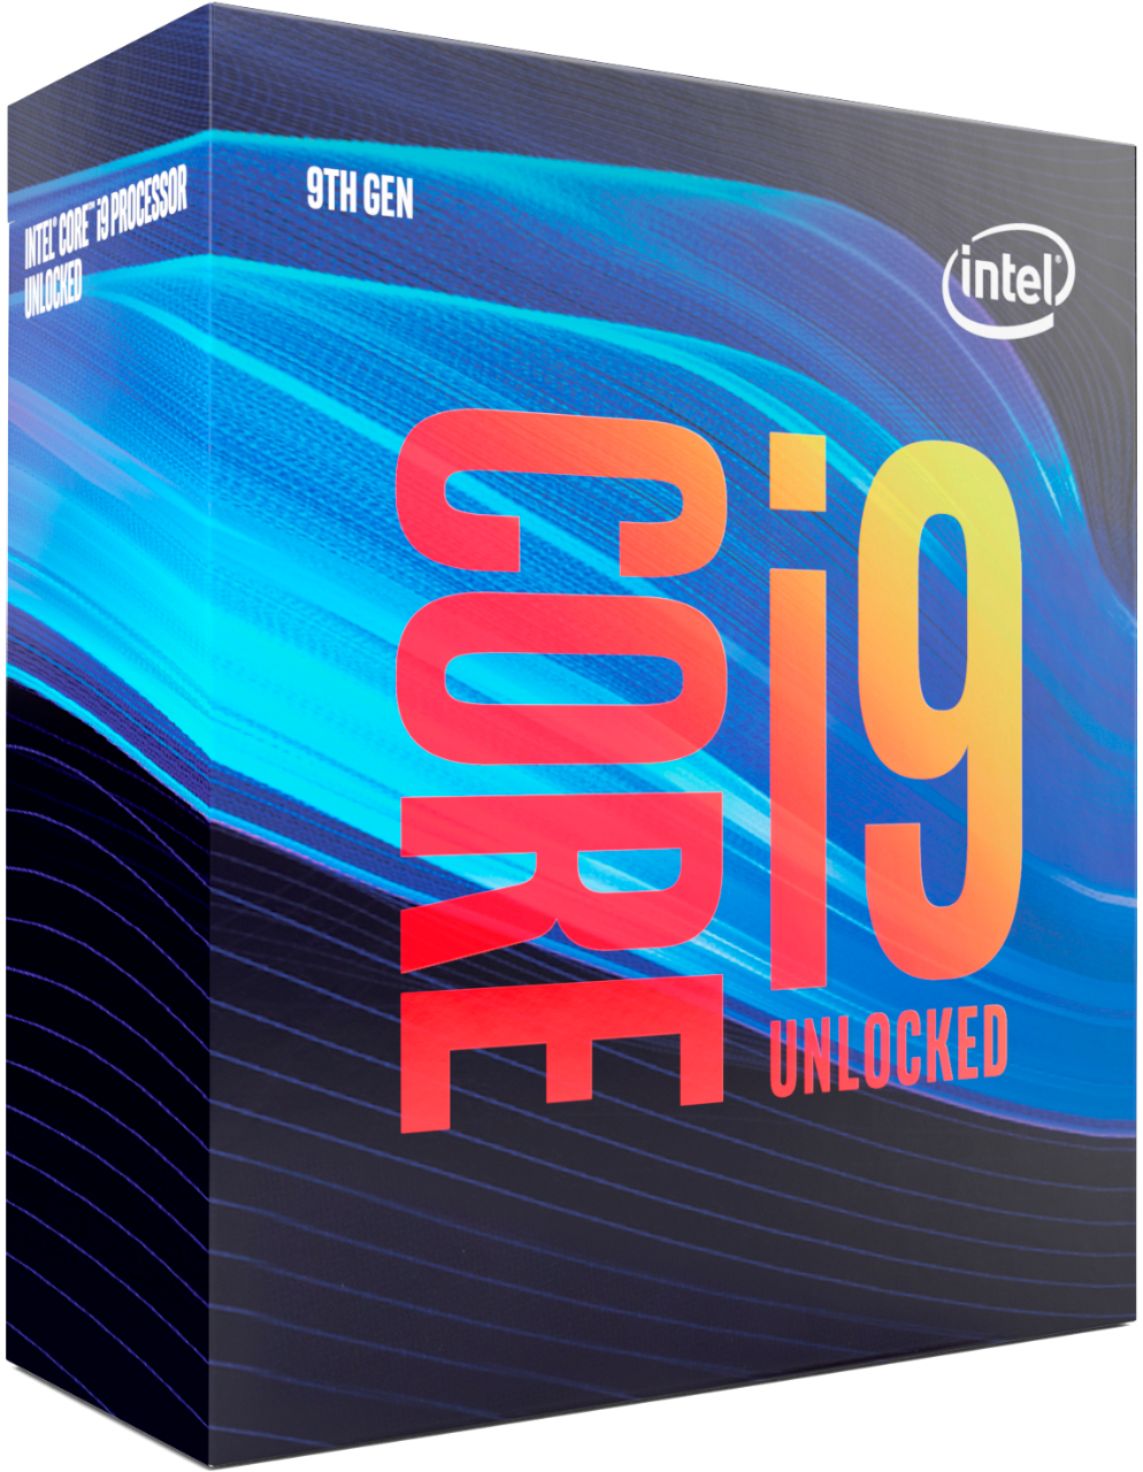 Best Buy: Intel Core i9-9900K 9th Generation 8-Core 16-Thread 3.6